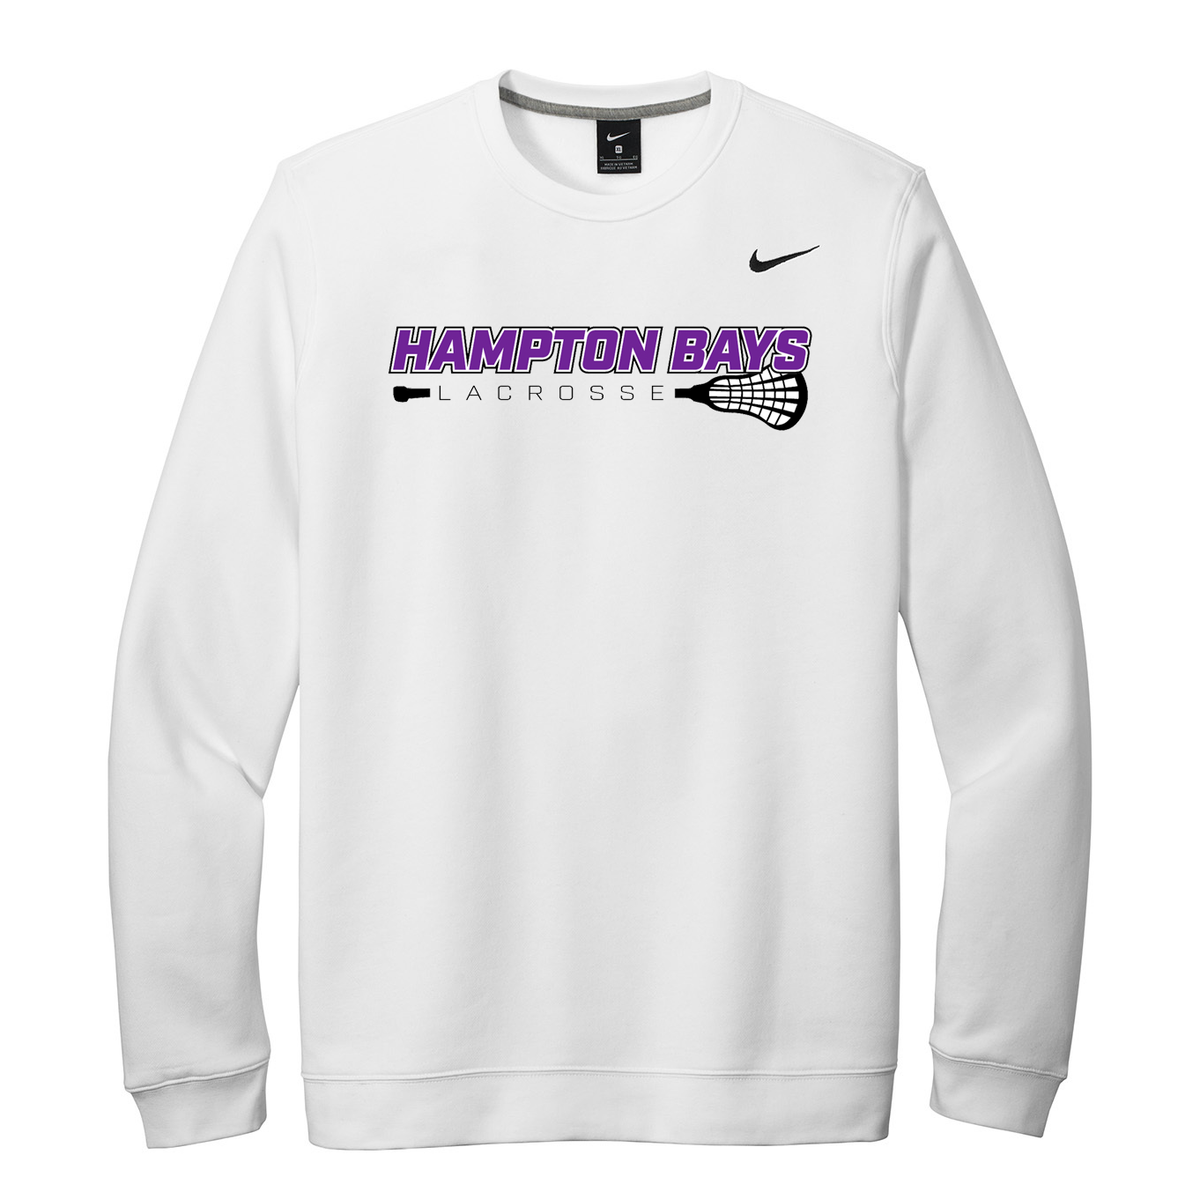 Hampton Bays Lacrosse Nike Fleece Crew Neck